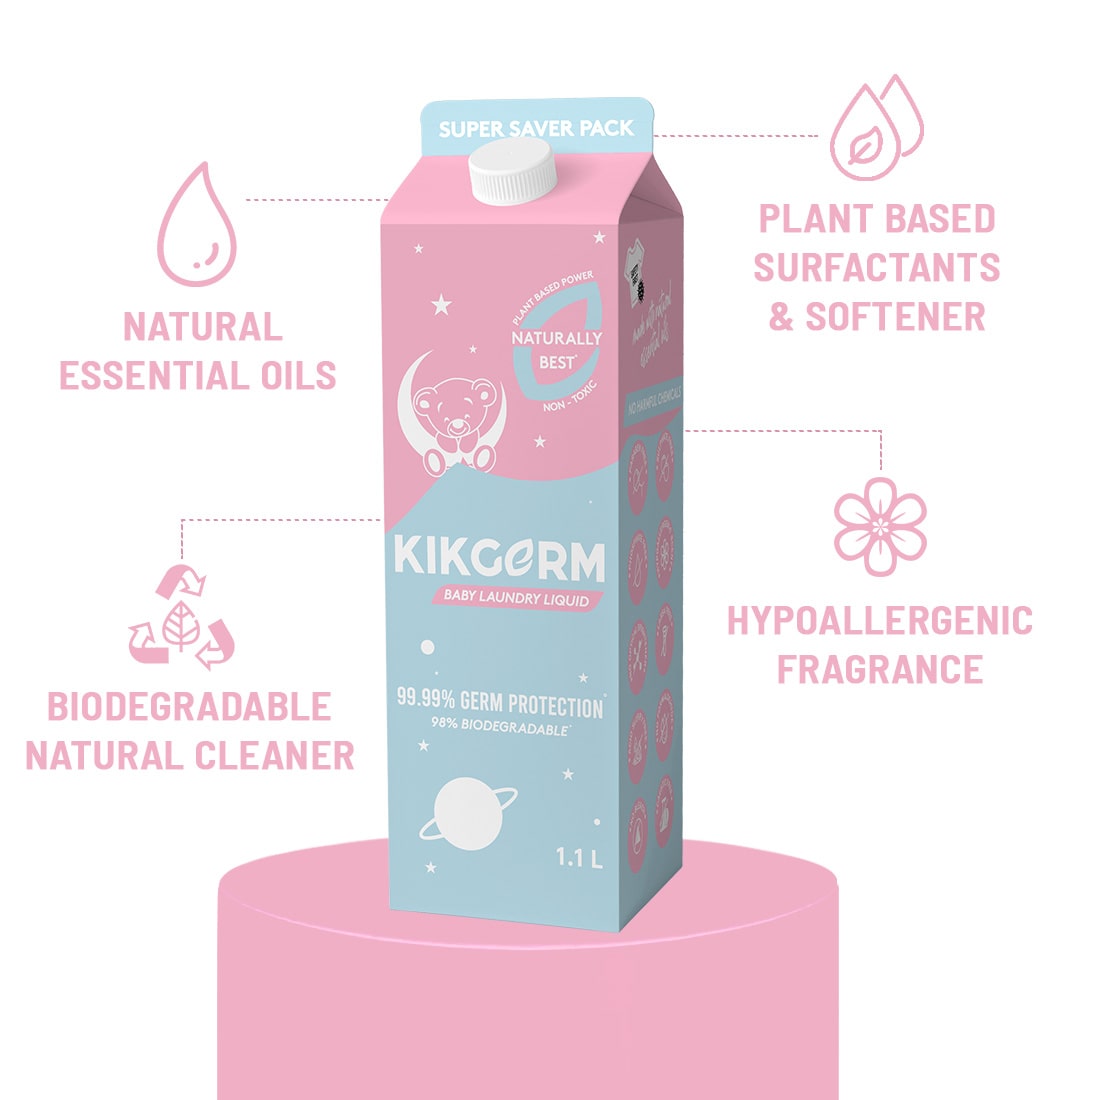 KIKGERM Naturally Baby Liquid Detergent | 3300ML | No Harmful Chemicals | New & Shiny Clothes 1.1L X 3 (3300ML)